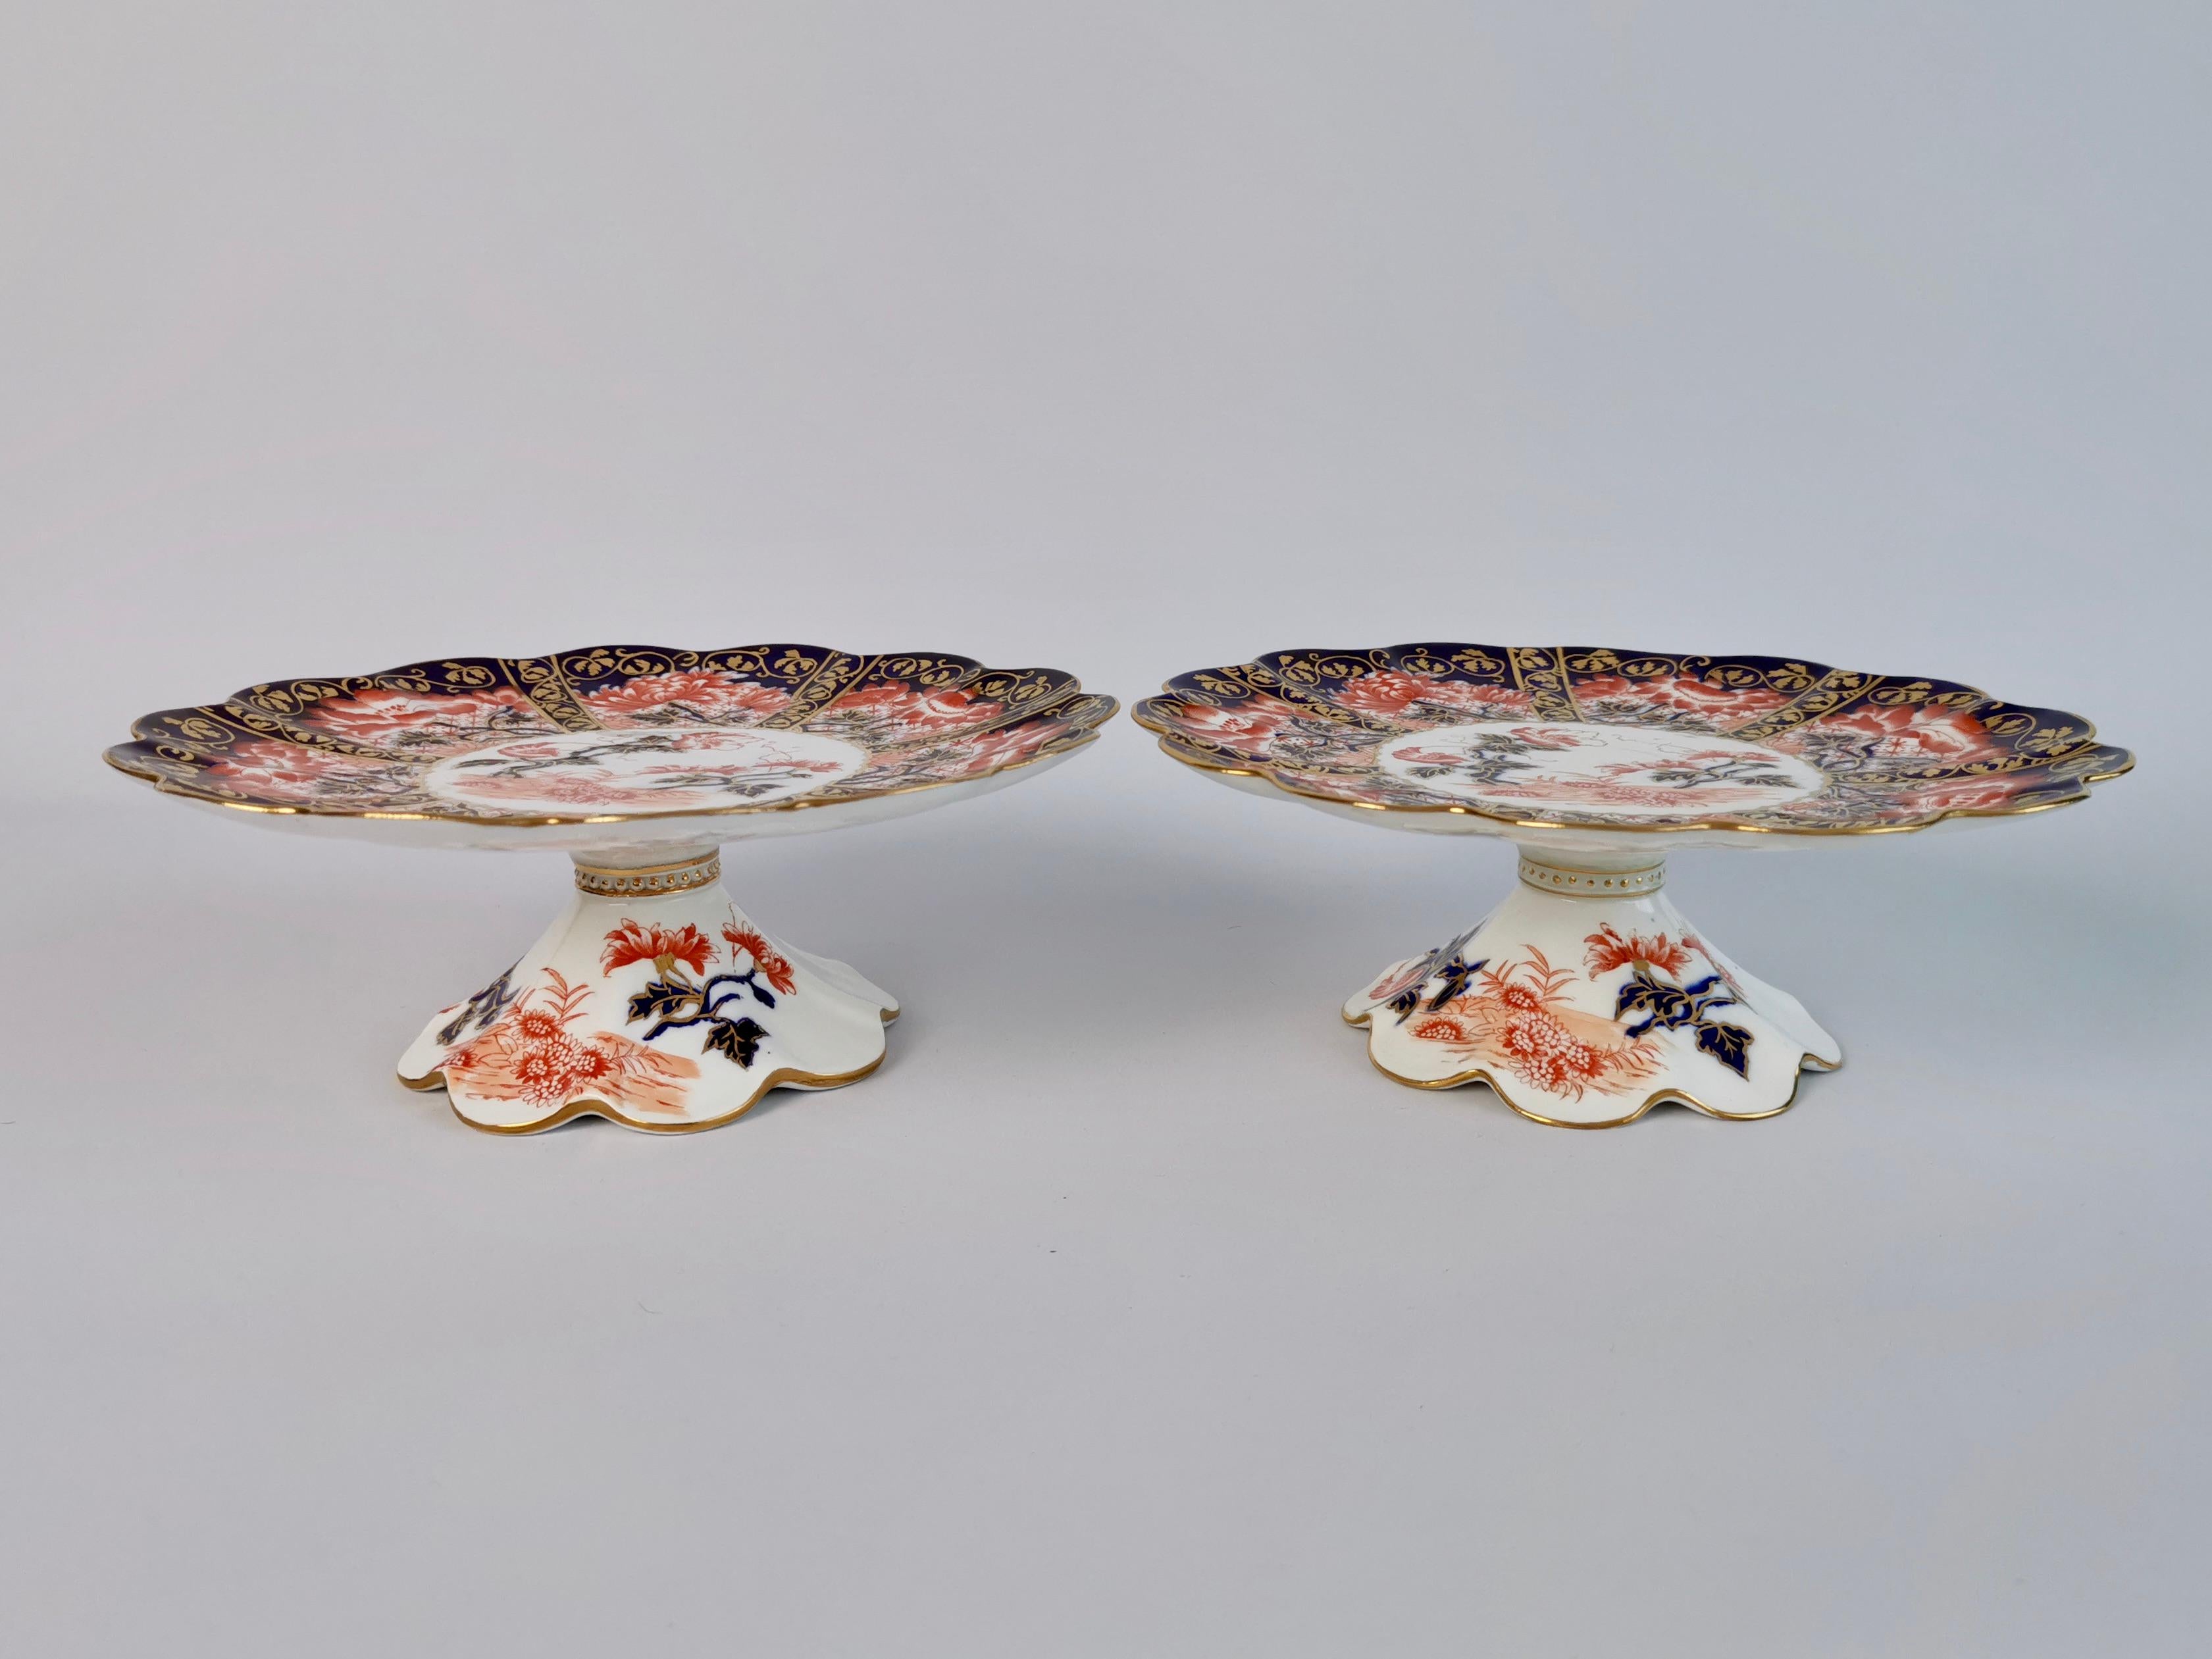 Porcelain Wileman Dessert Service, Art Nouveau Japan Patt, 6664, 1895-1914